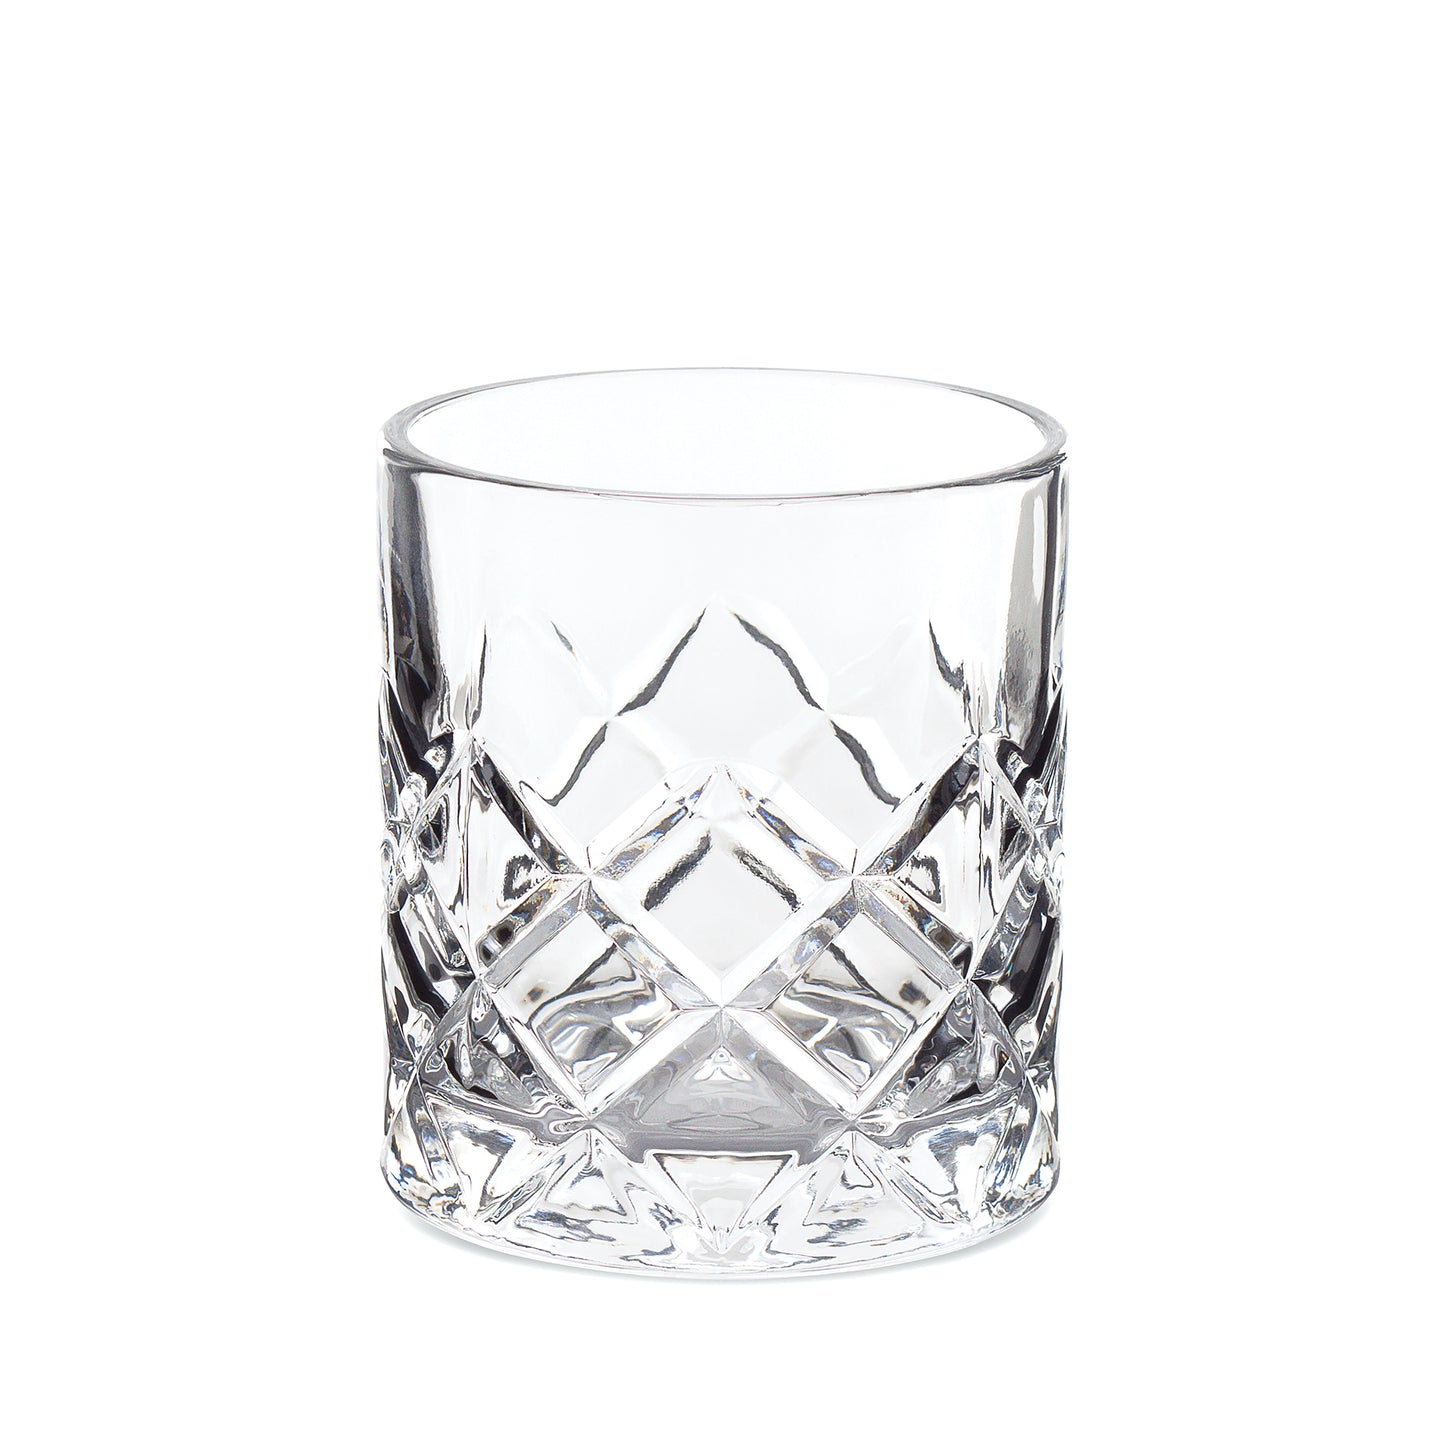 YARAI® ROCKS GLASS – 7.5oz (225ml) / 6 PACK – Cocktail Kingdom